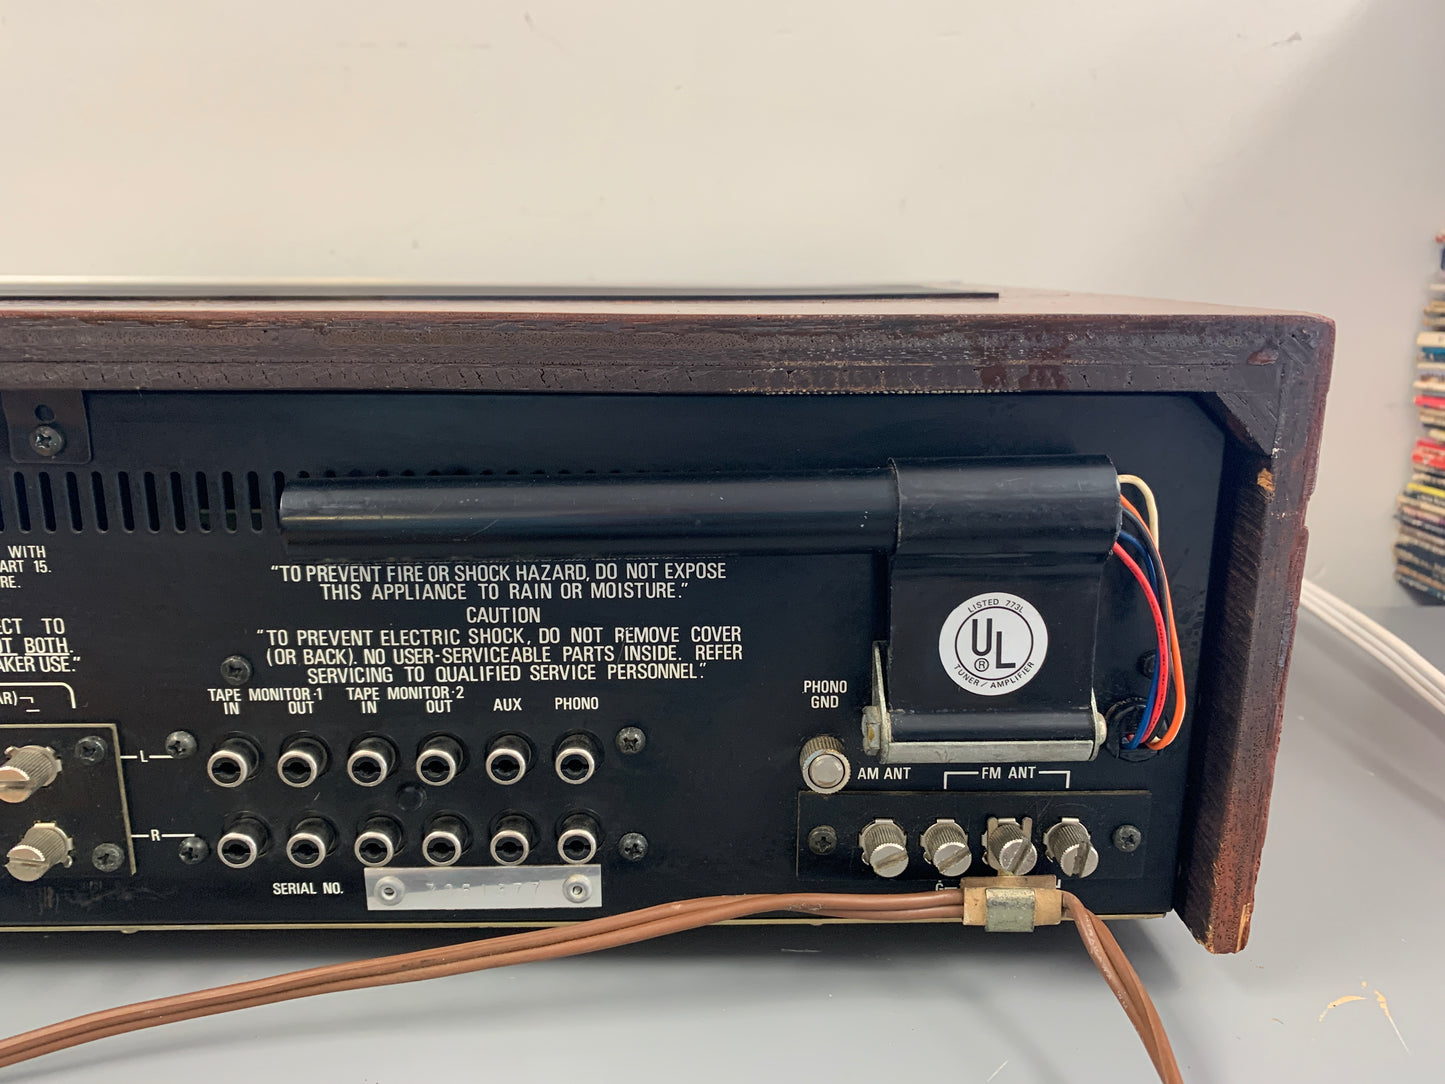 Realistic STA-90 Stereo Receiver * 45W * 1978